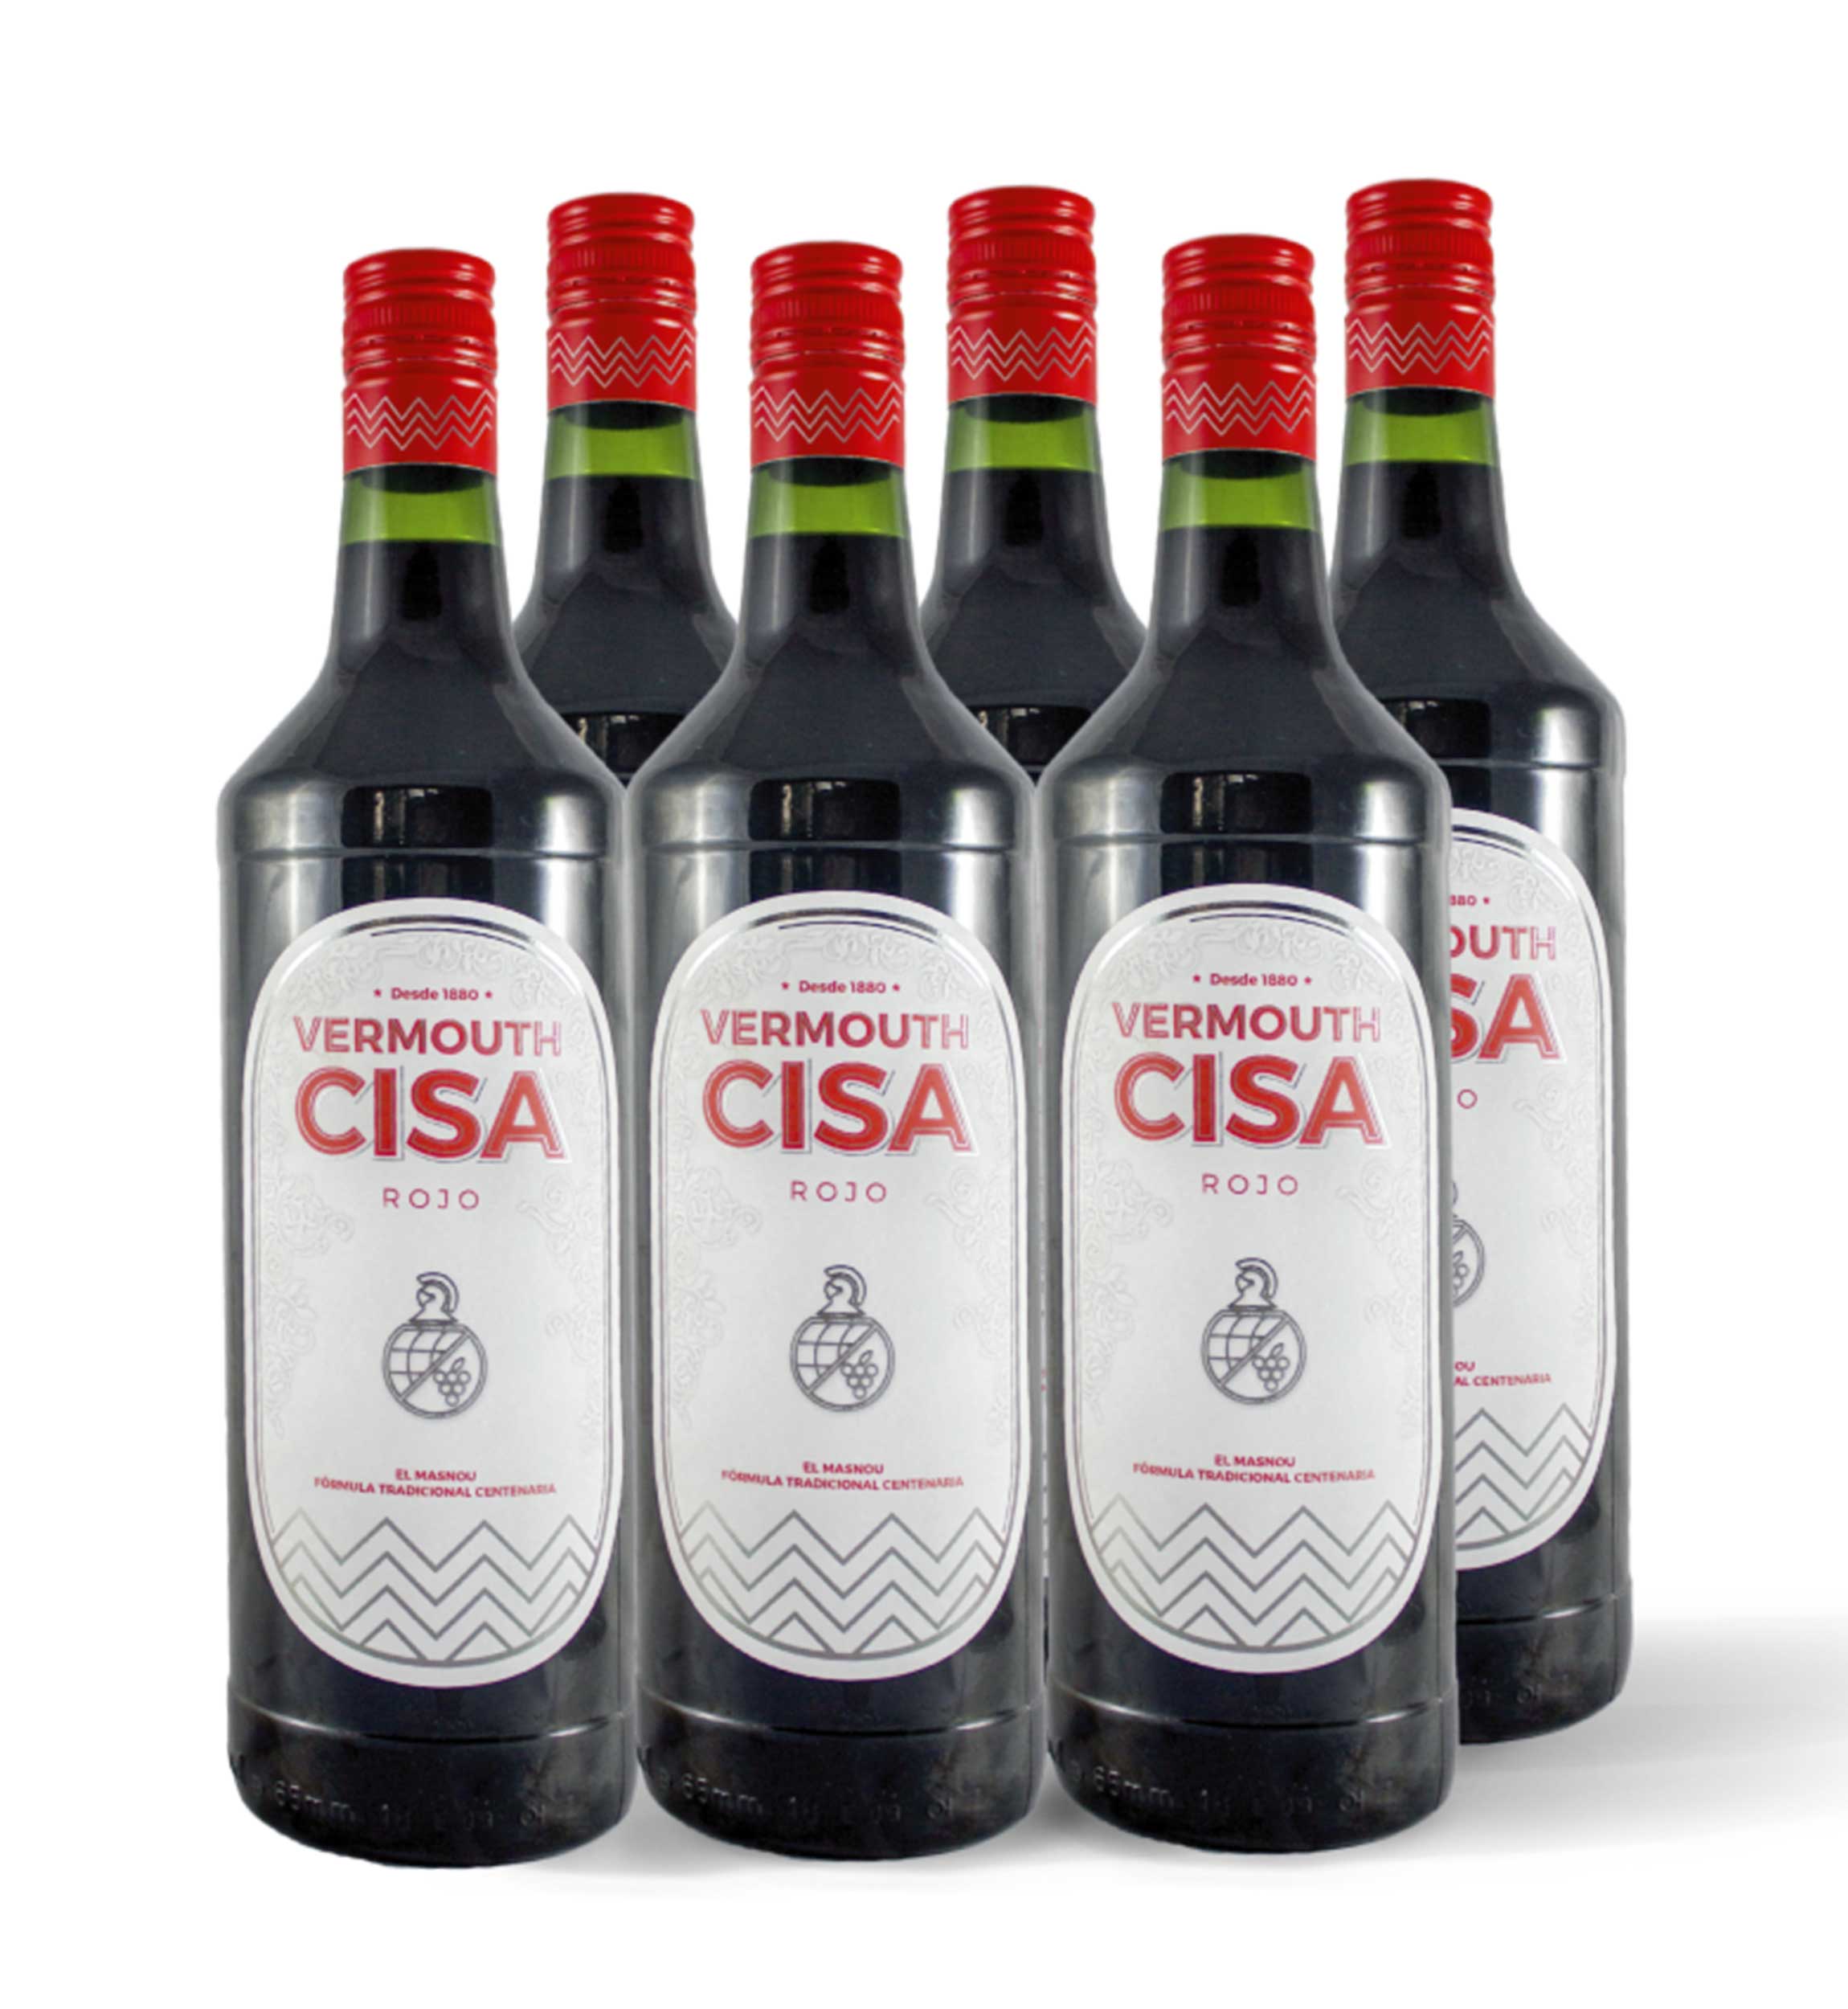 Pack de 6 botellas de Vermouth Cisa Rojo